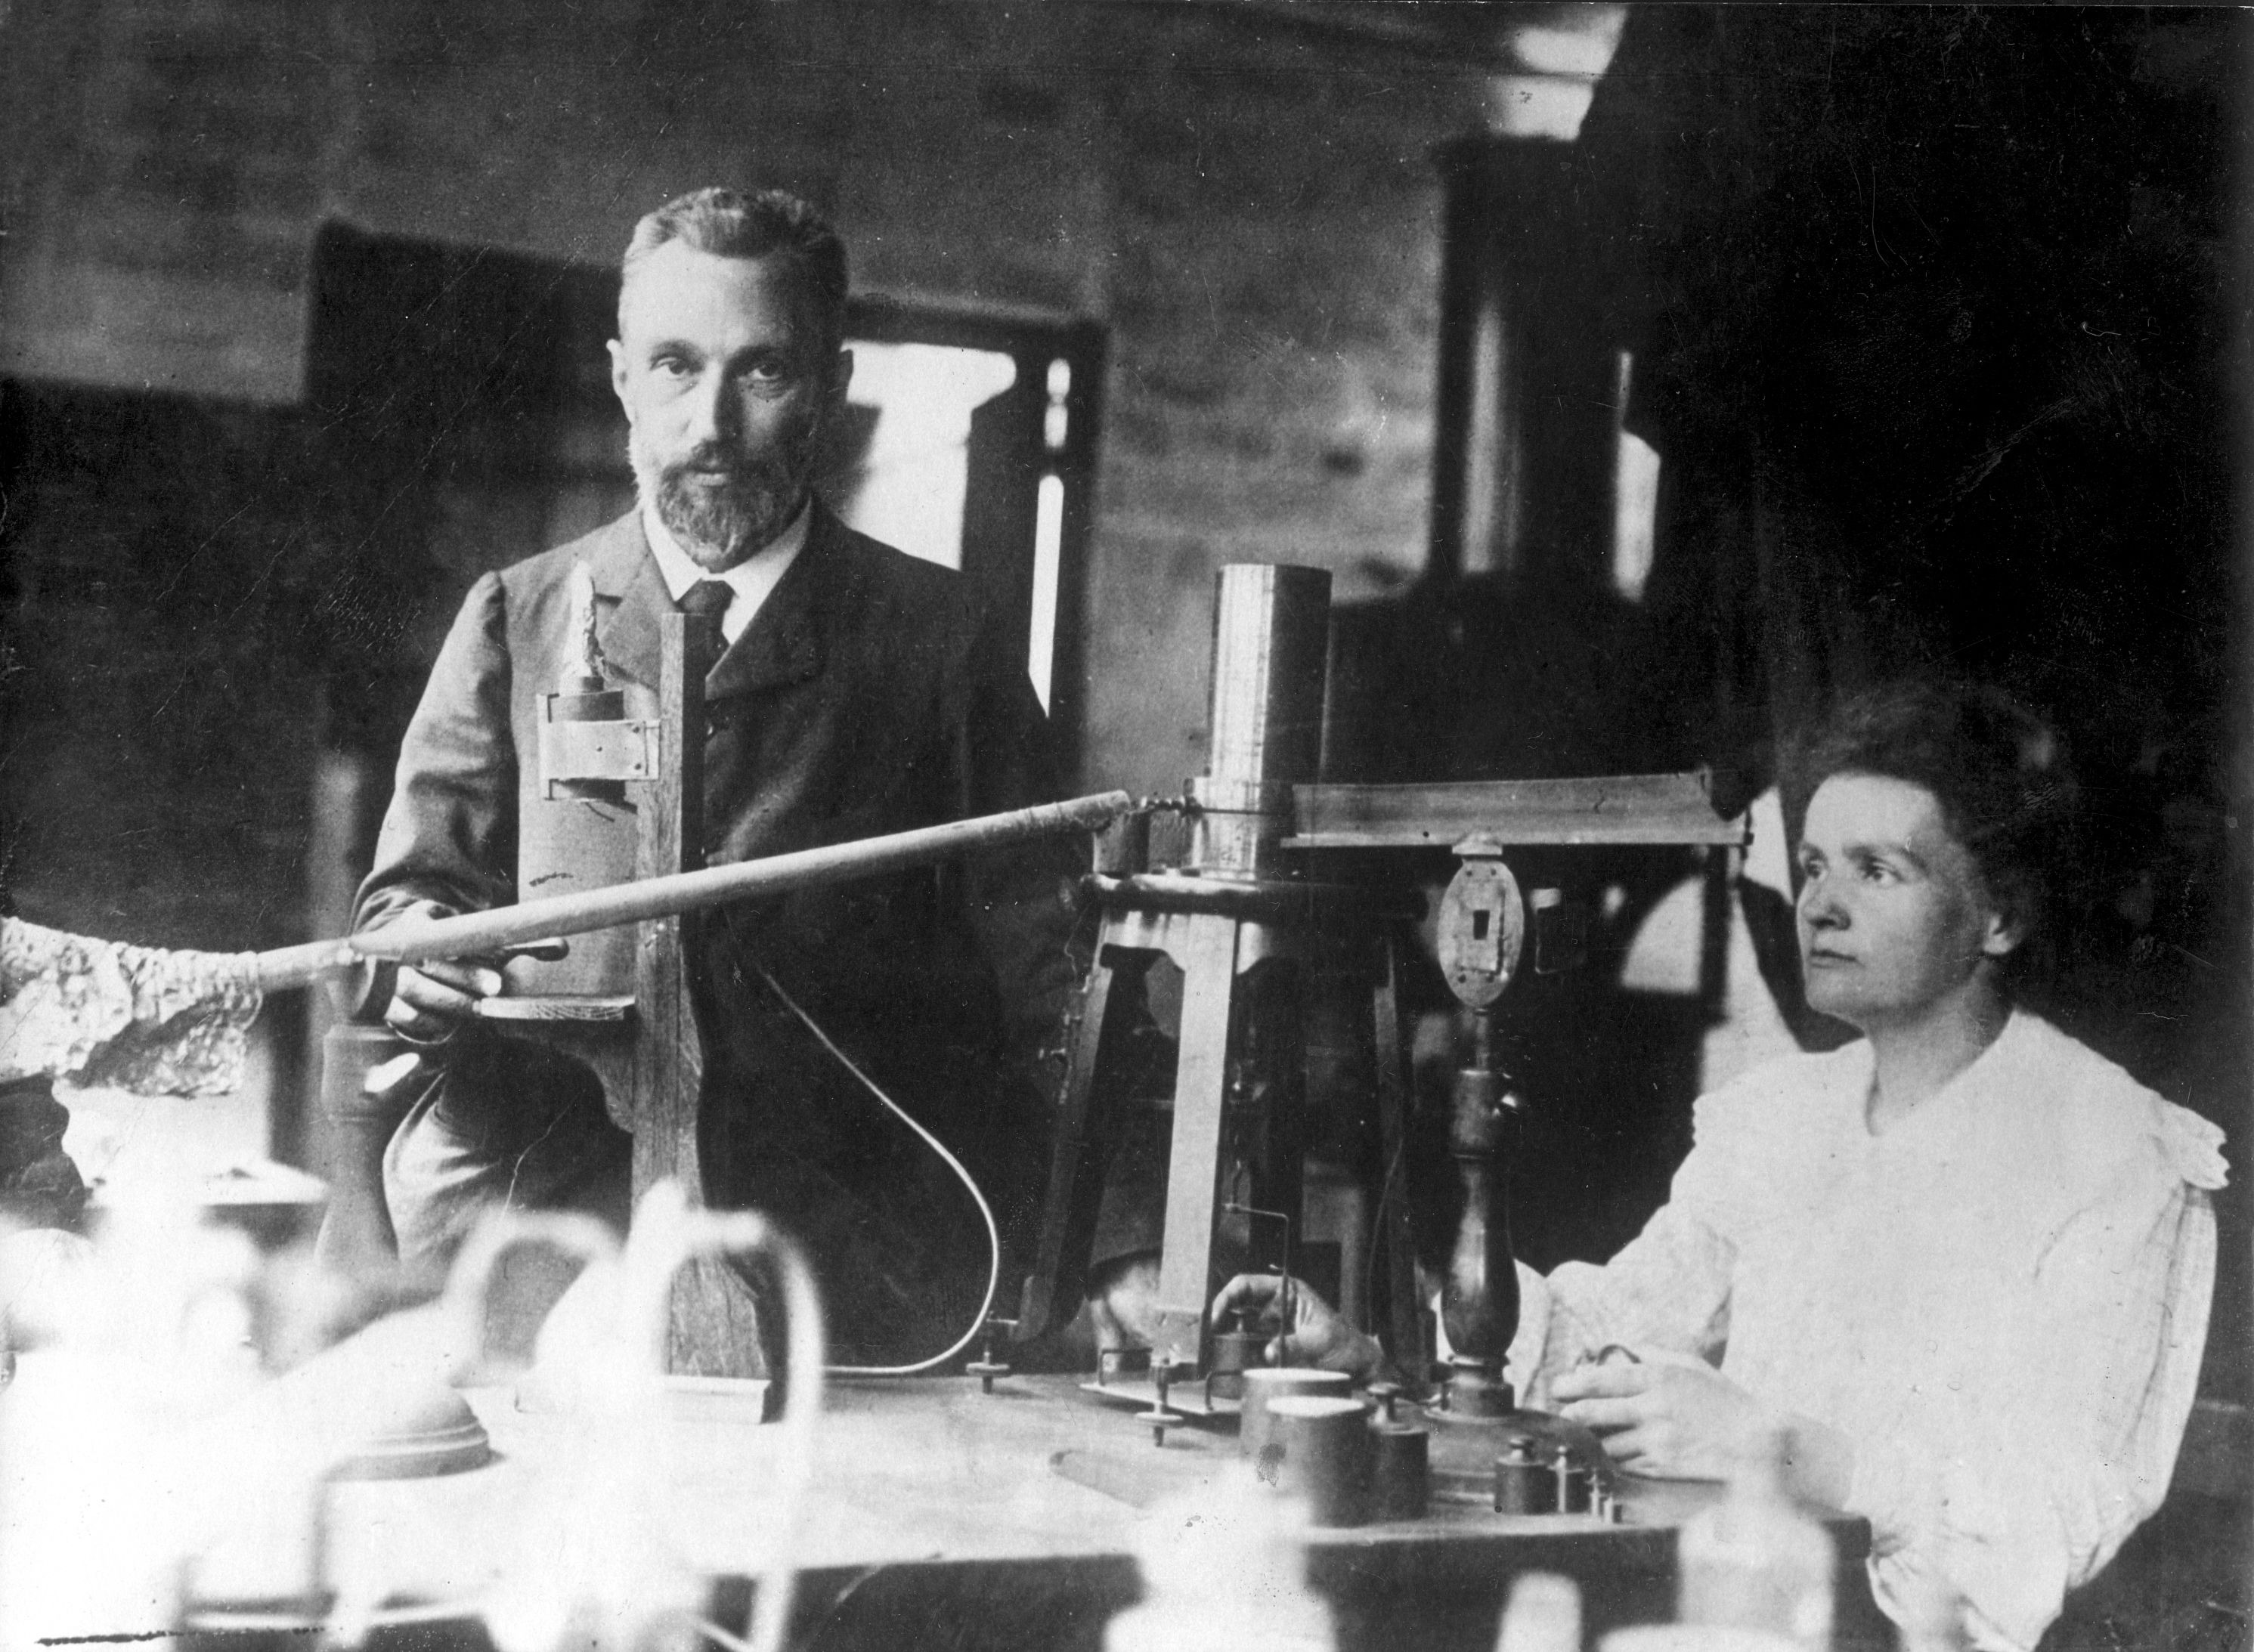 Les notes de Marie Curie sont radioactives